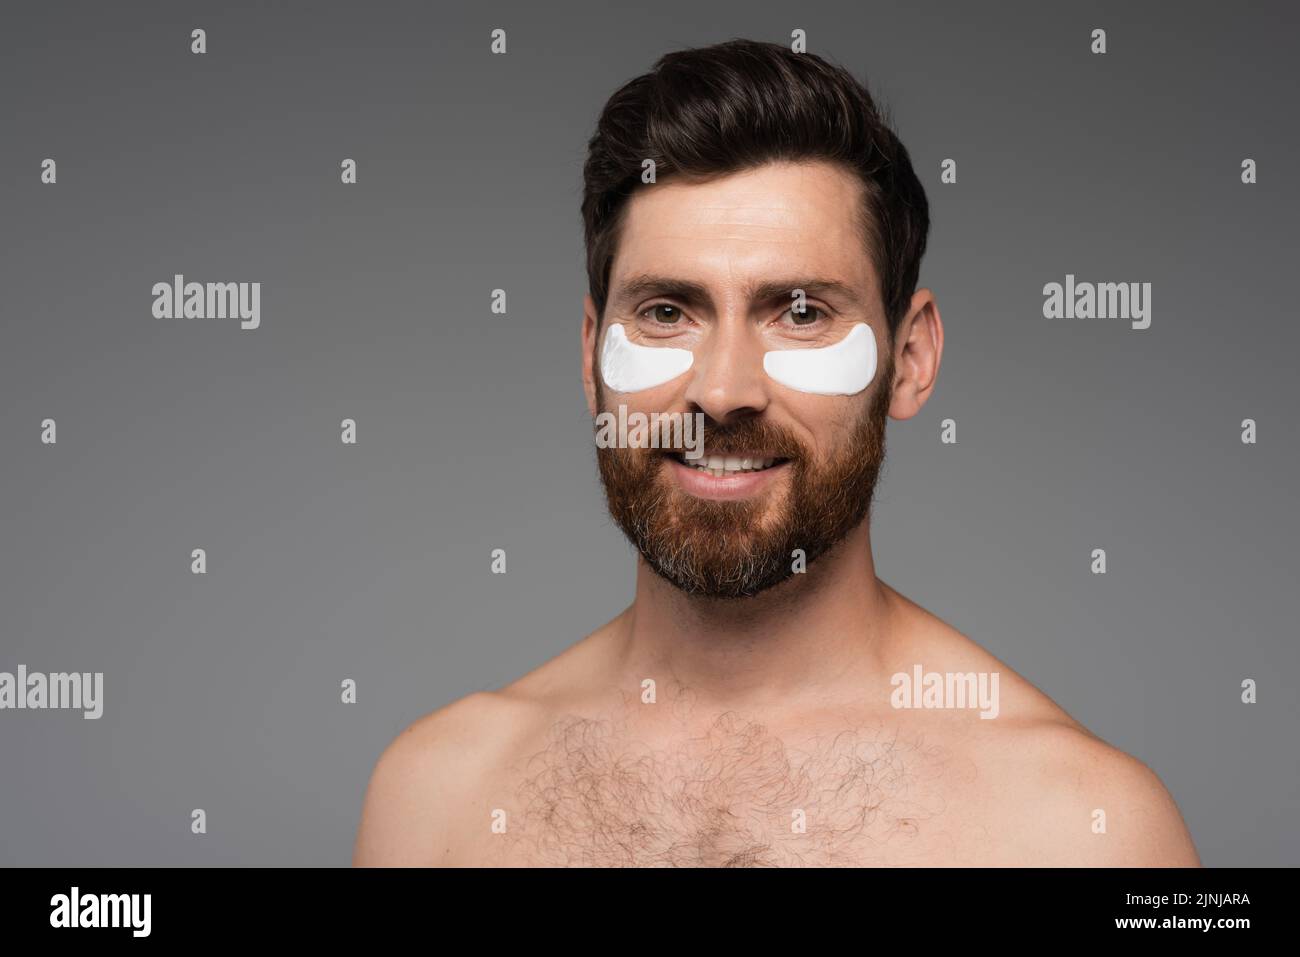 happy bearded man with moisturizing eye patches isolated on grey,stock image Stock Photo